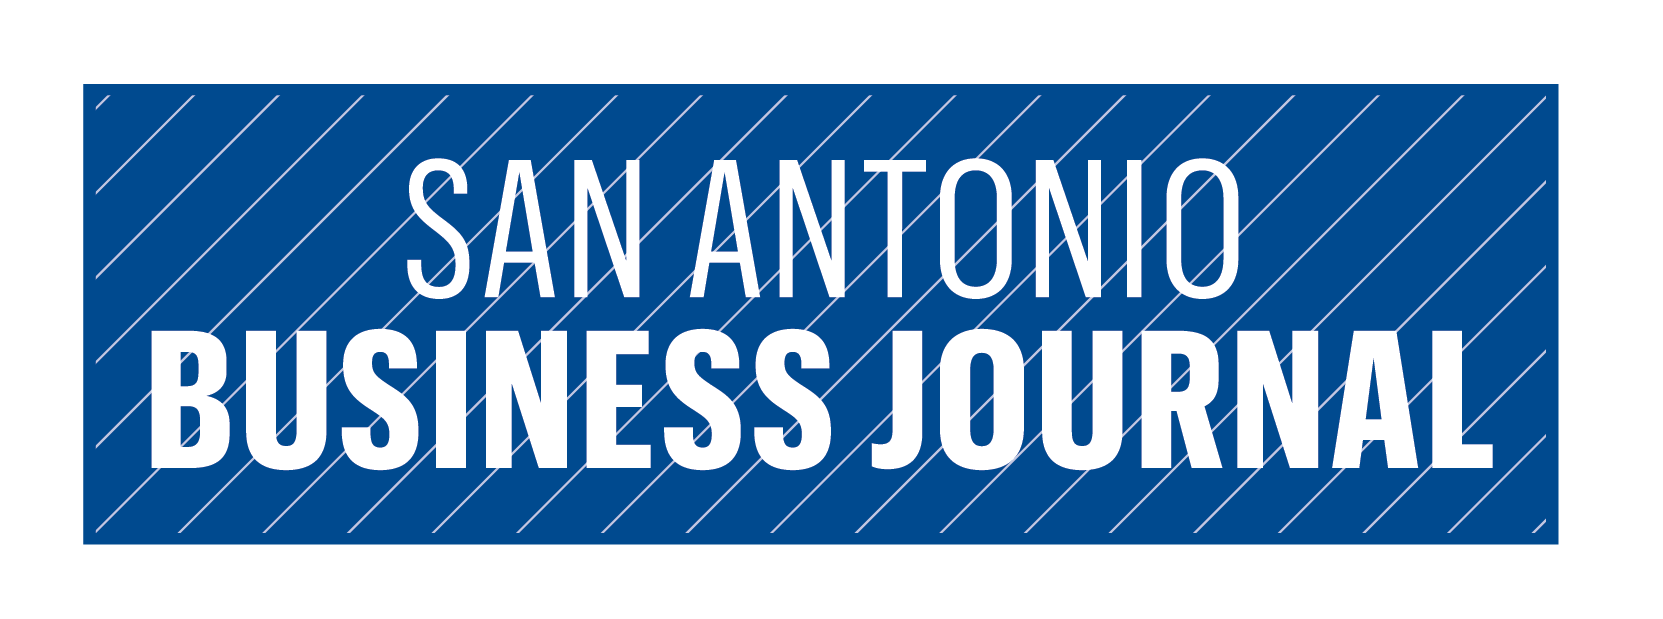 San Antonio Business Journal Logo